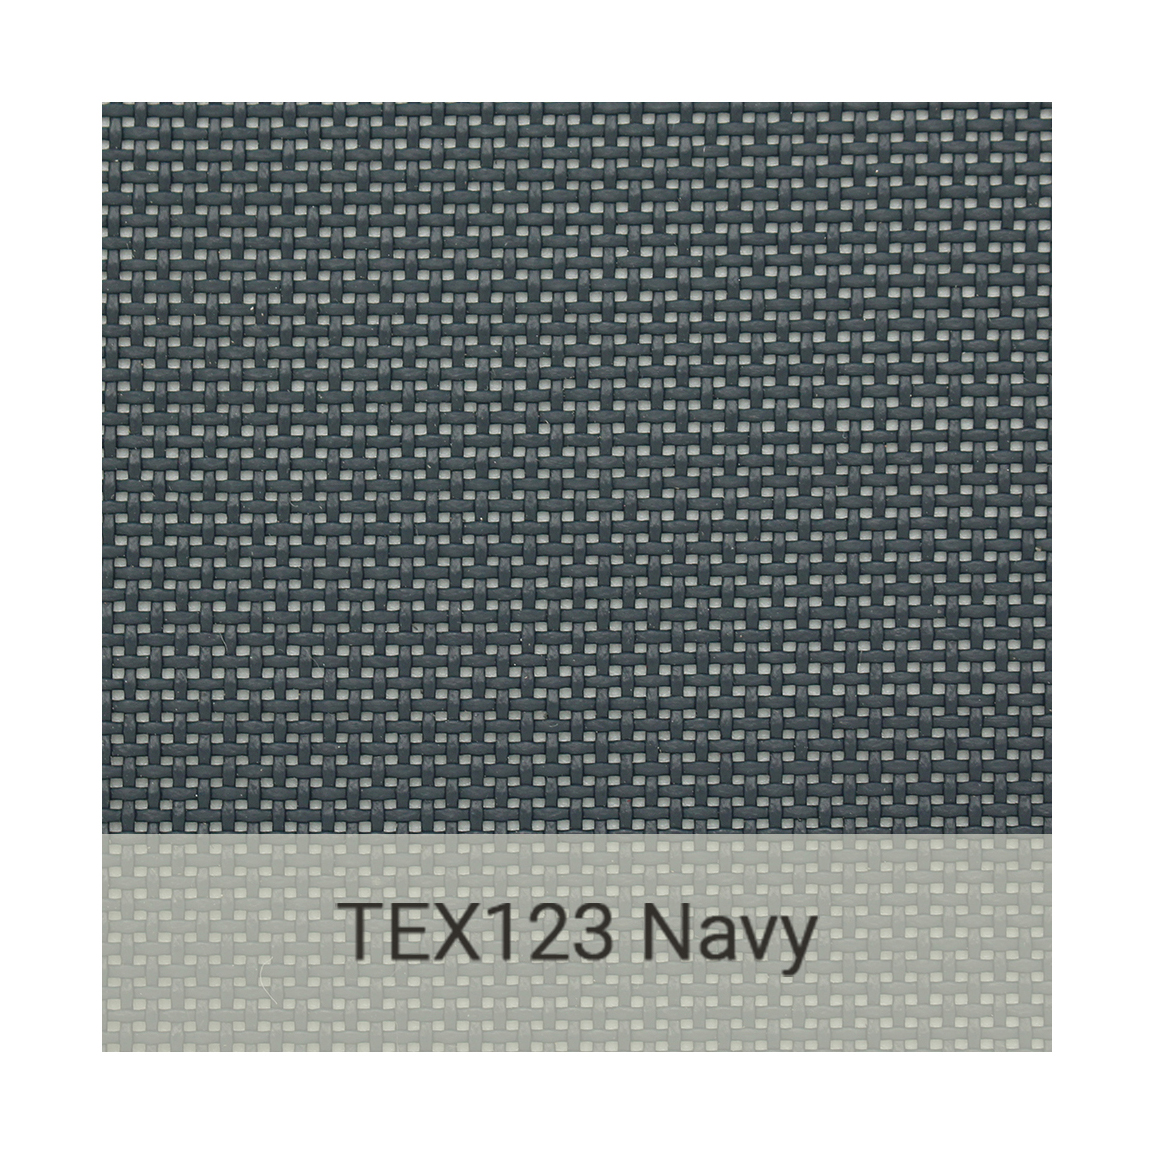 Kingston Casual textiline-tex123-navy